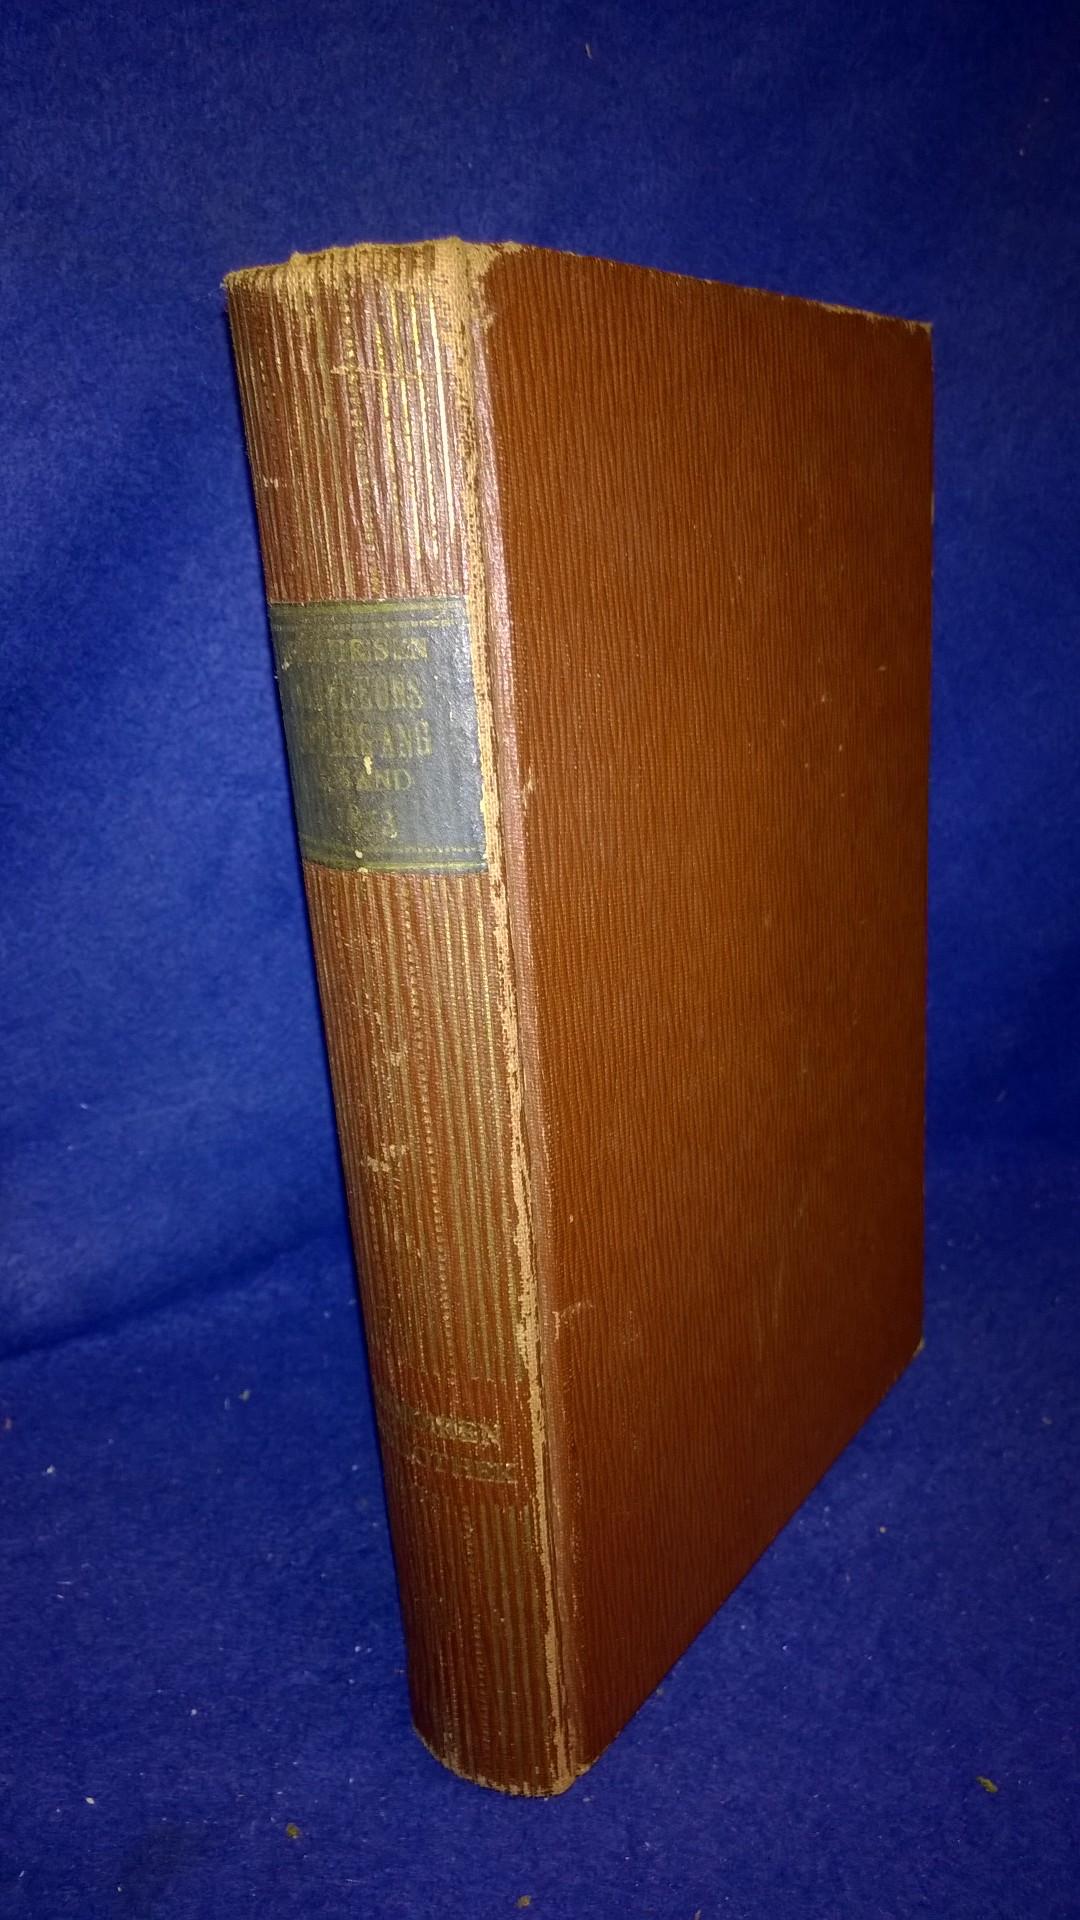 Memoiren Bibliothek IV. Serie, Elfter Band. Napoleons Untergang, Zweiter Band 1813.